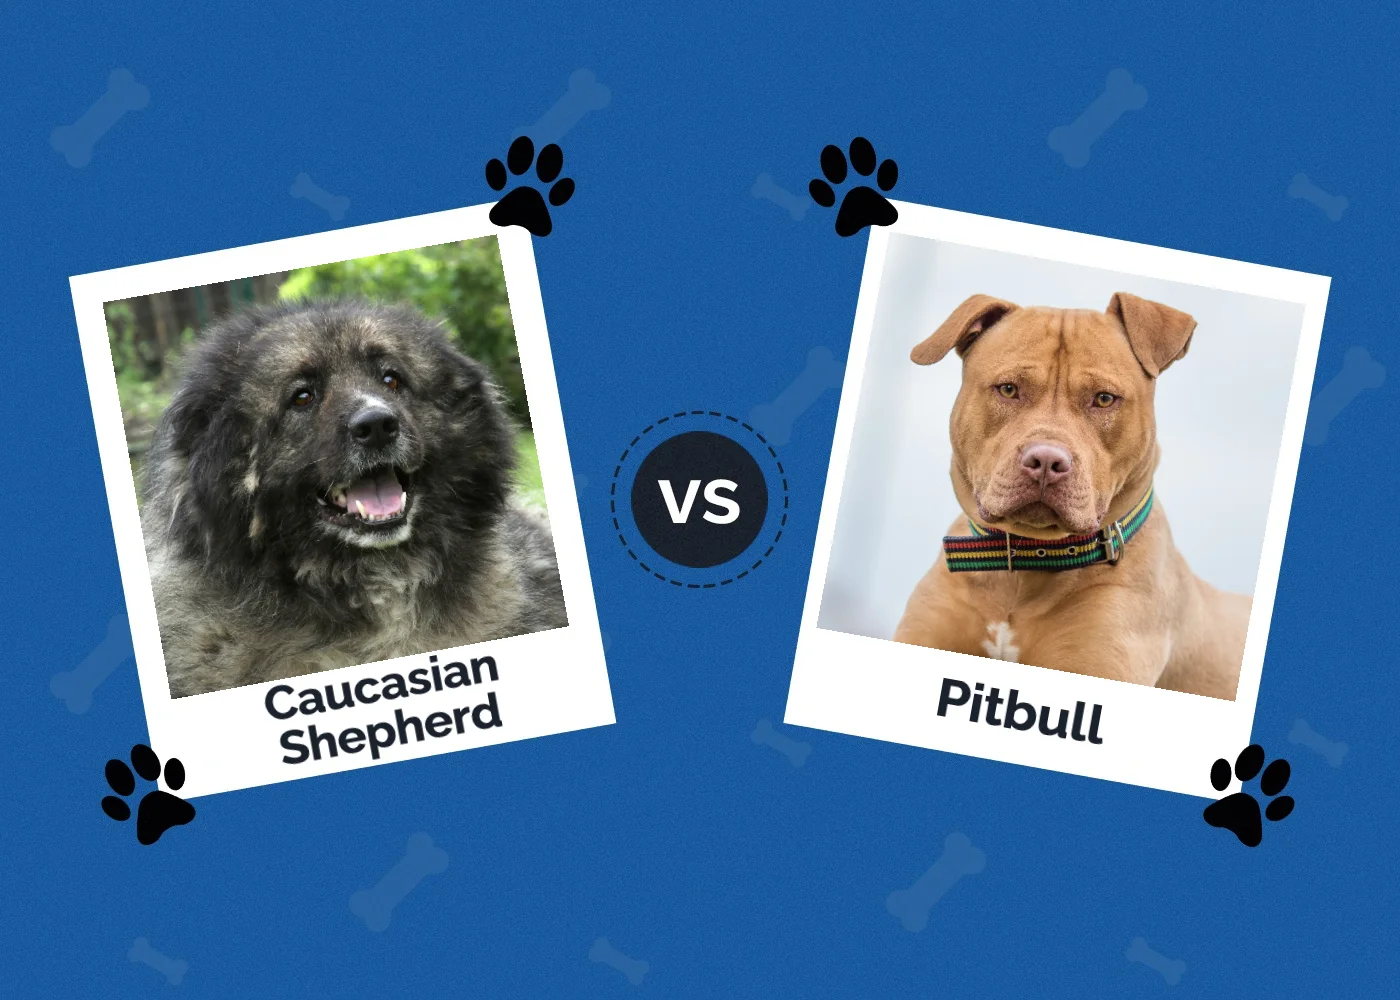 Caucasian Shepherd vs Pitbull - Featured Image